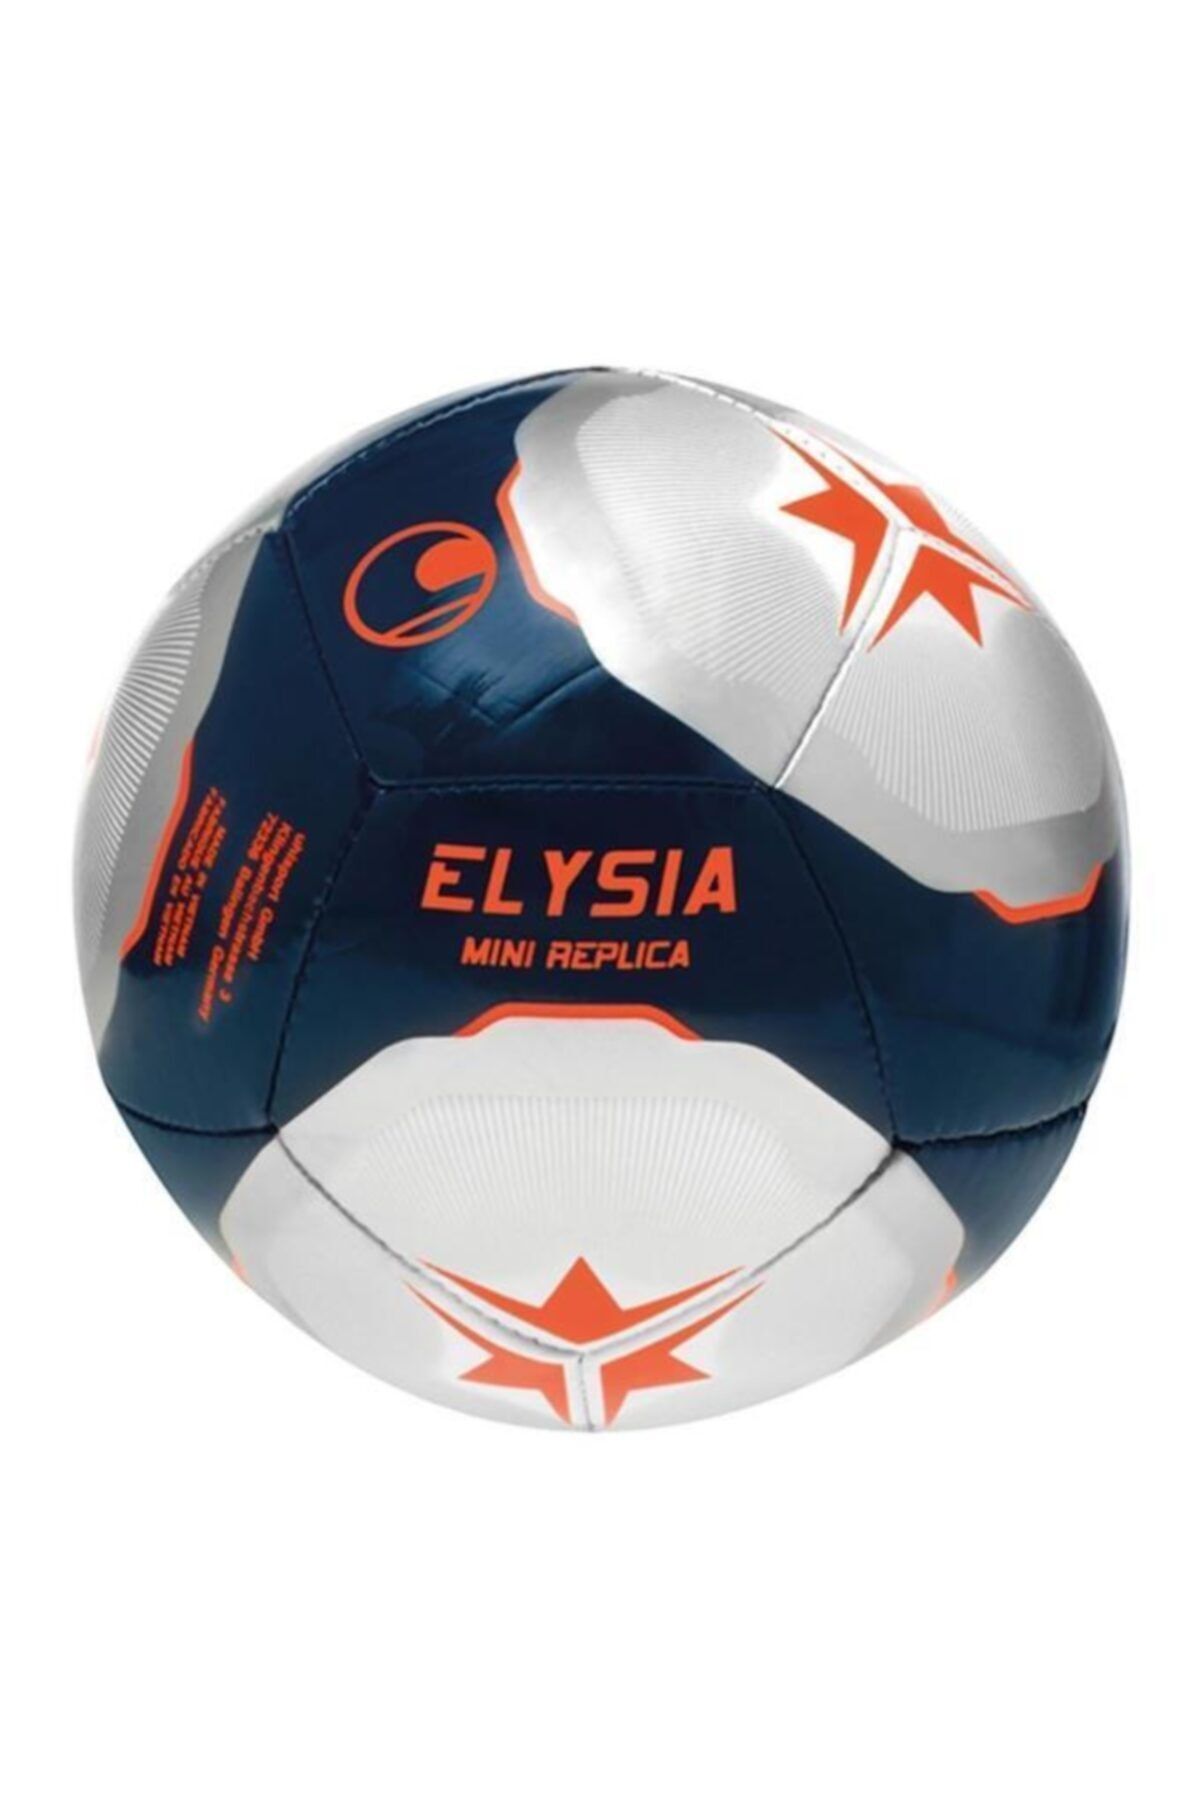 uhlsport Elysia Pro Ligue 1001705 Mini Futbol Topu